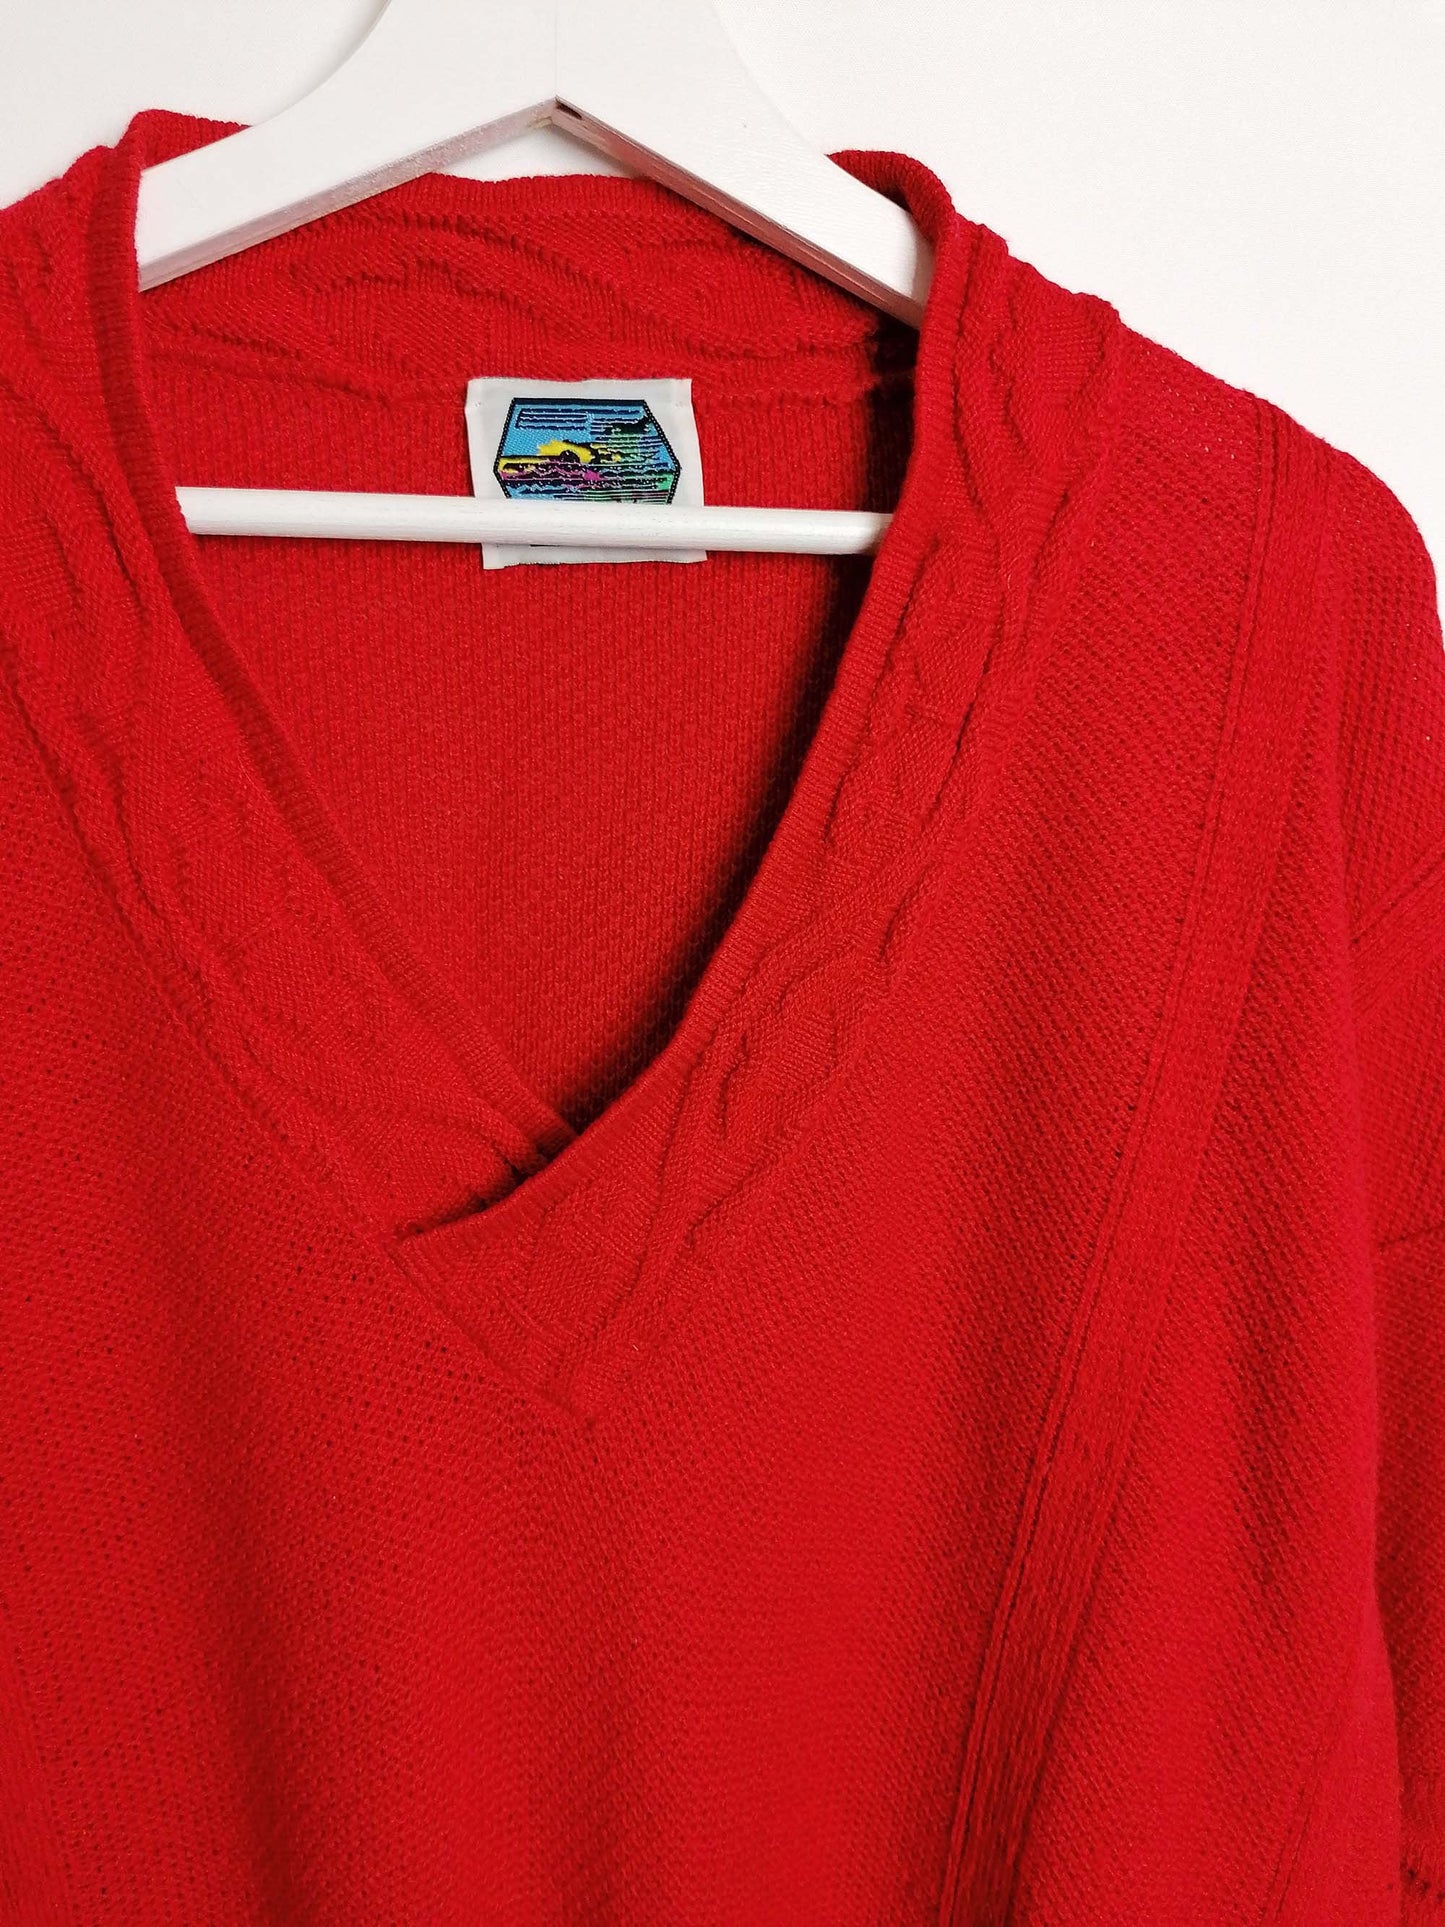 80's Retro V-neck Sweater Red